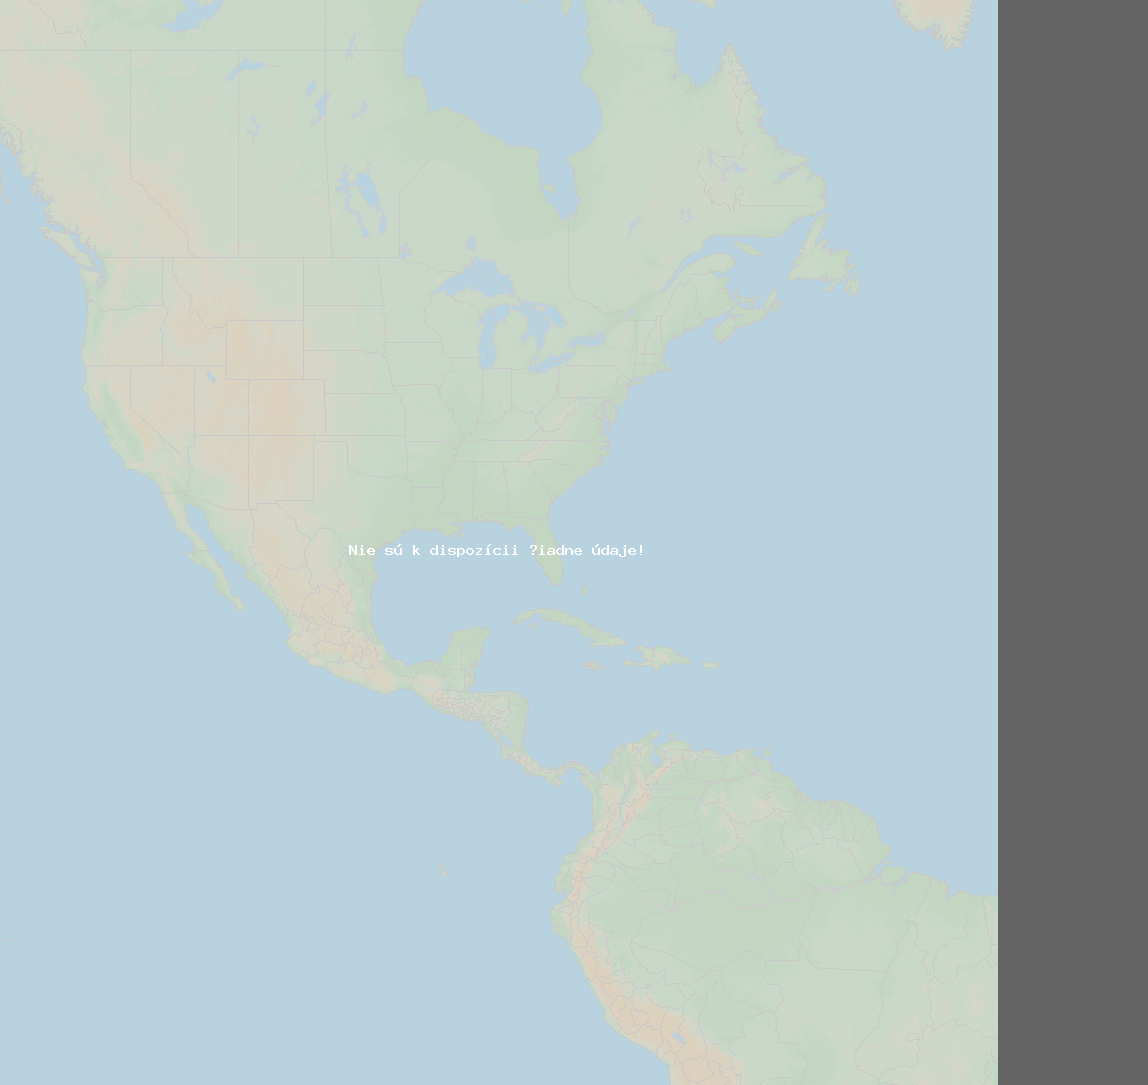 Pomer bleskov (Stanica Haleakala) North America 2020 